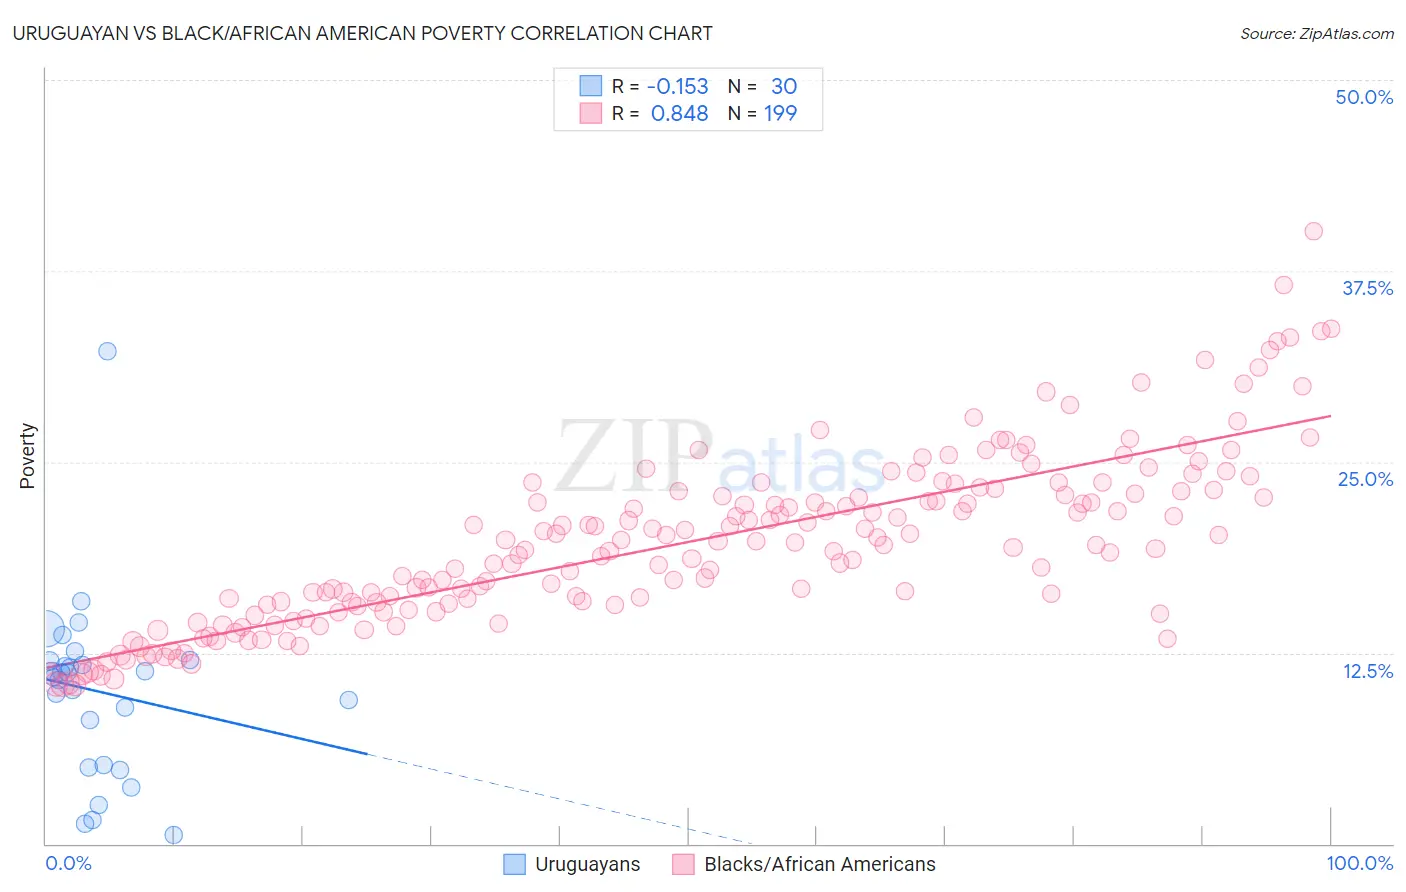 Uruguayan vs Black/African American Poverty